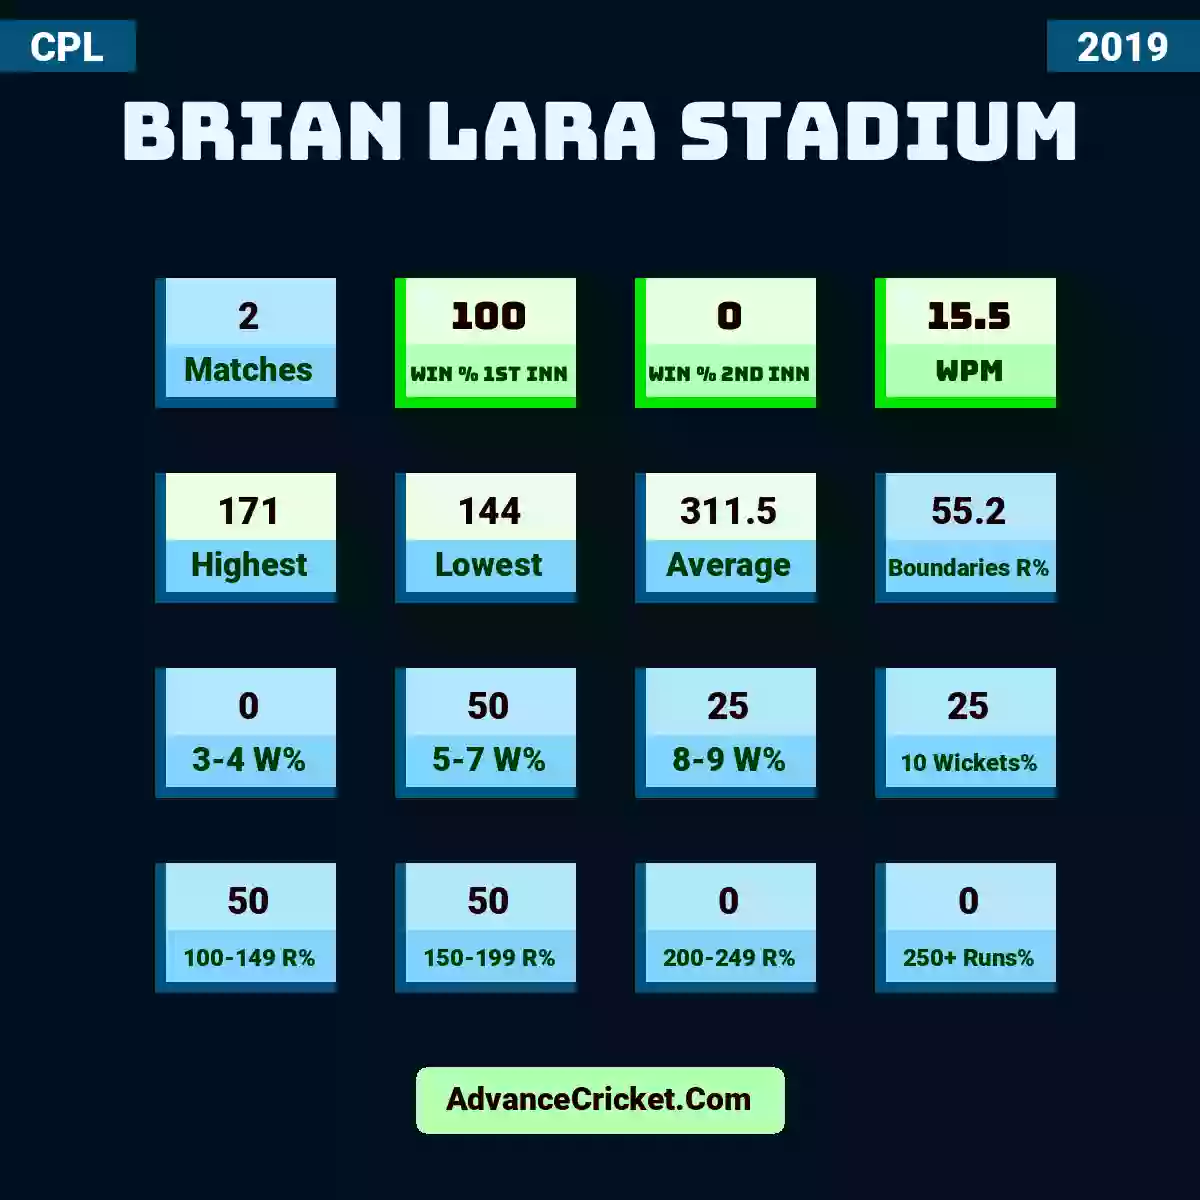 Image showing Brian Lara Stadium with Matches: 2, Win % 1st Inn: 100, Win % 2nd Inn: 0, WPM: 15.5, Highest: 171, Lowest: 144, Average: 311.5, Boundaries R%: 55.2, 3-4 W%: 0, 5-7 W%: 50, 8-9 W%: 25, 10 Wickets%: 25, 100-149 R%: 50, 150-199 R%: 50, 200-249 R%: 0, 250+ Runs%: 0.